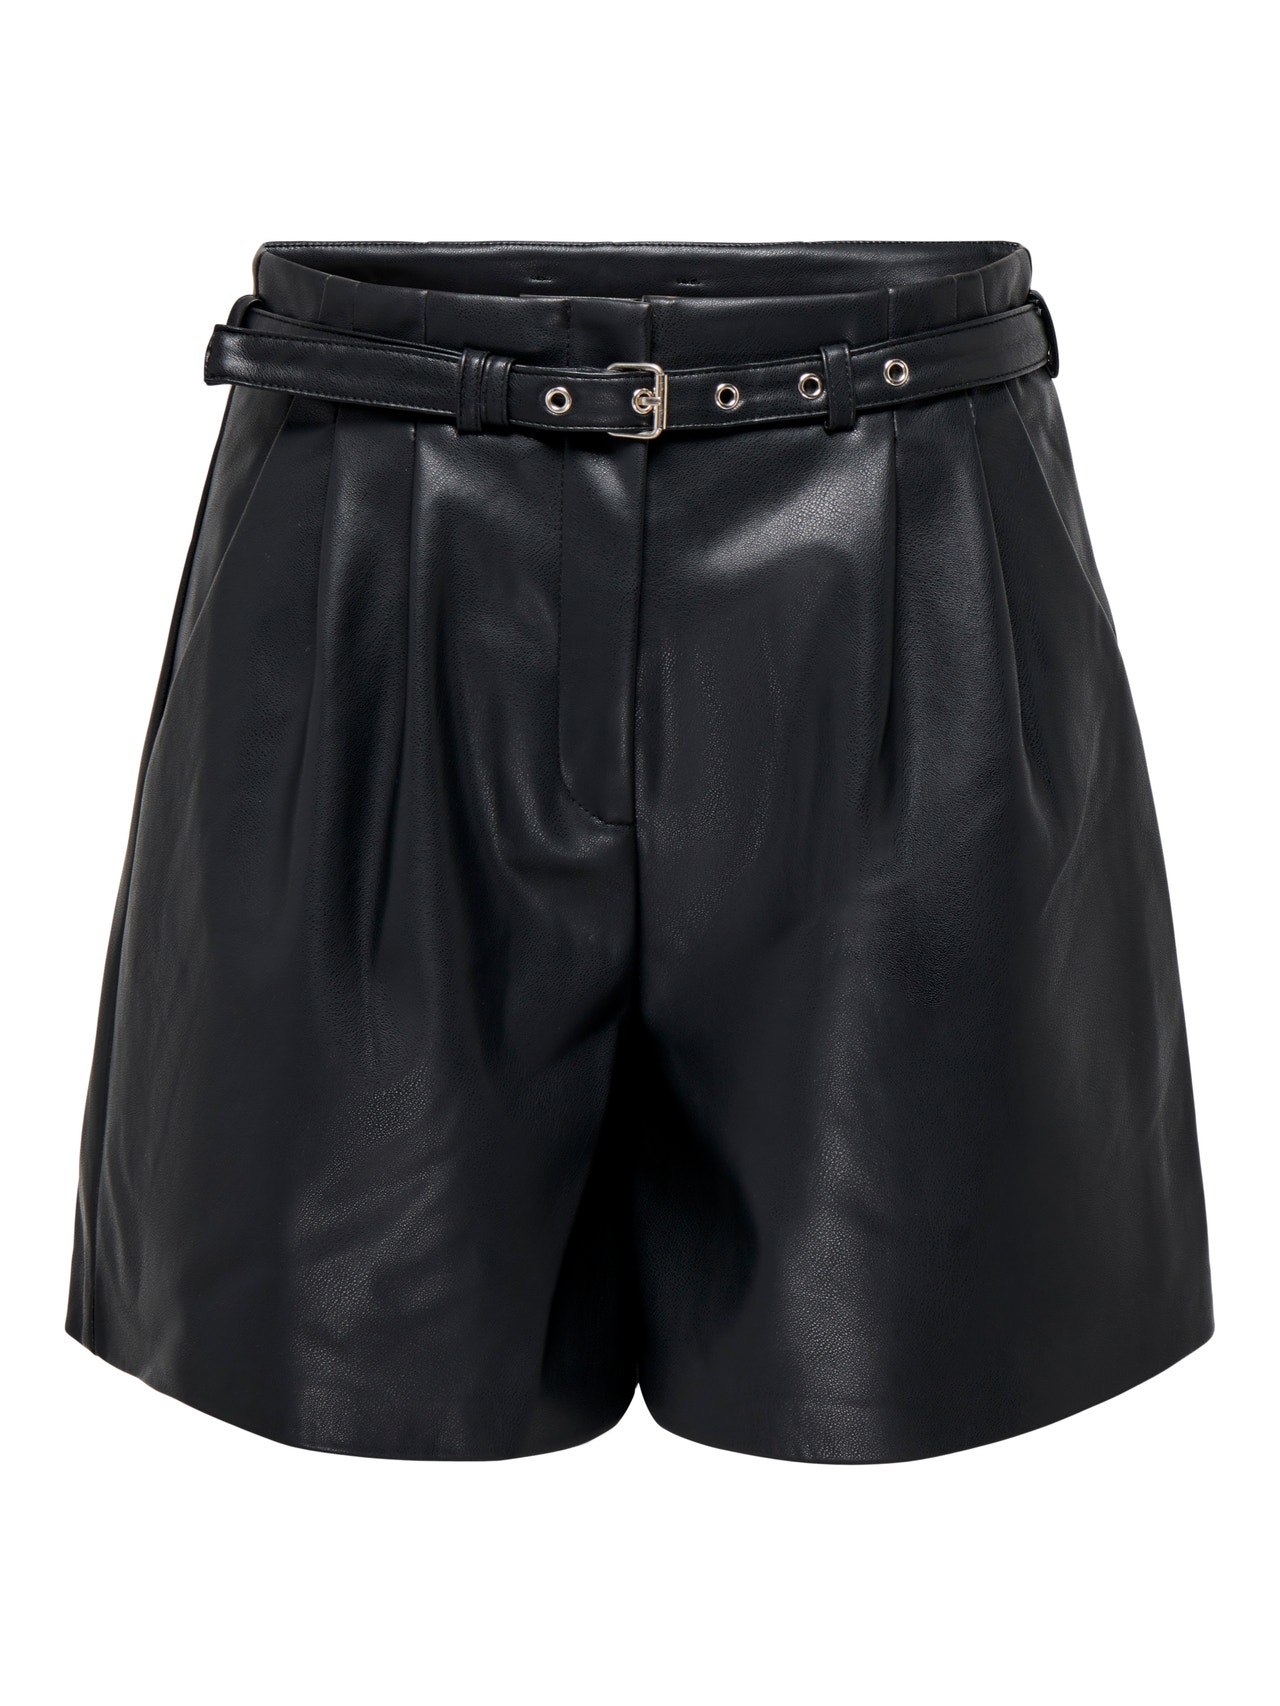 Faux leather shorts, Black